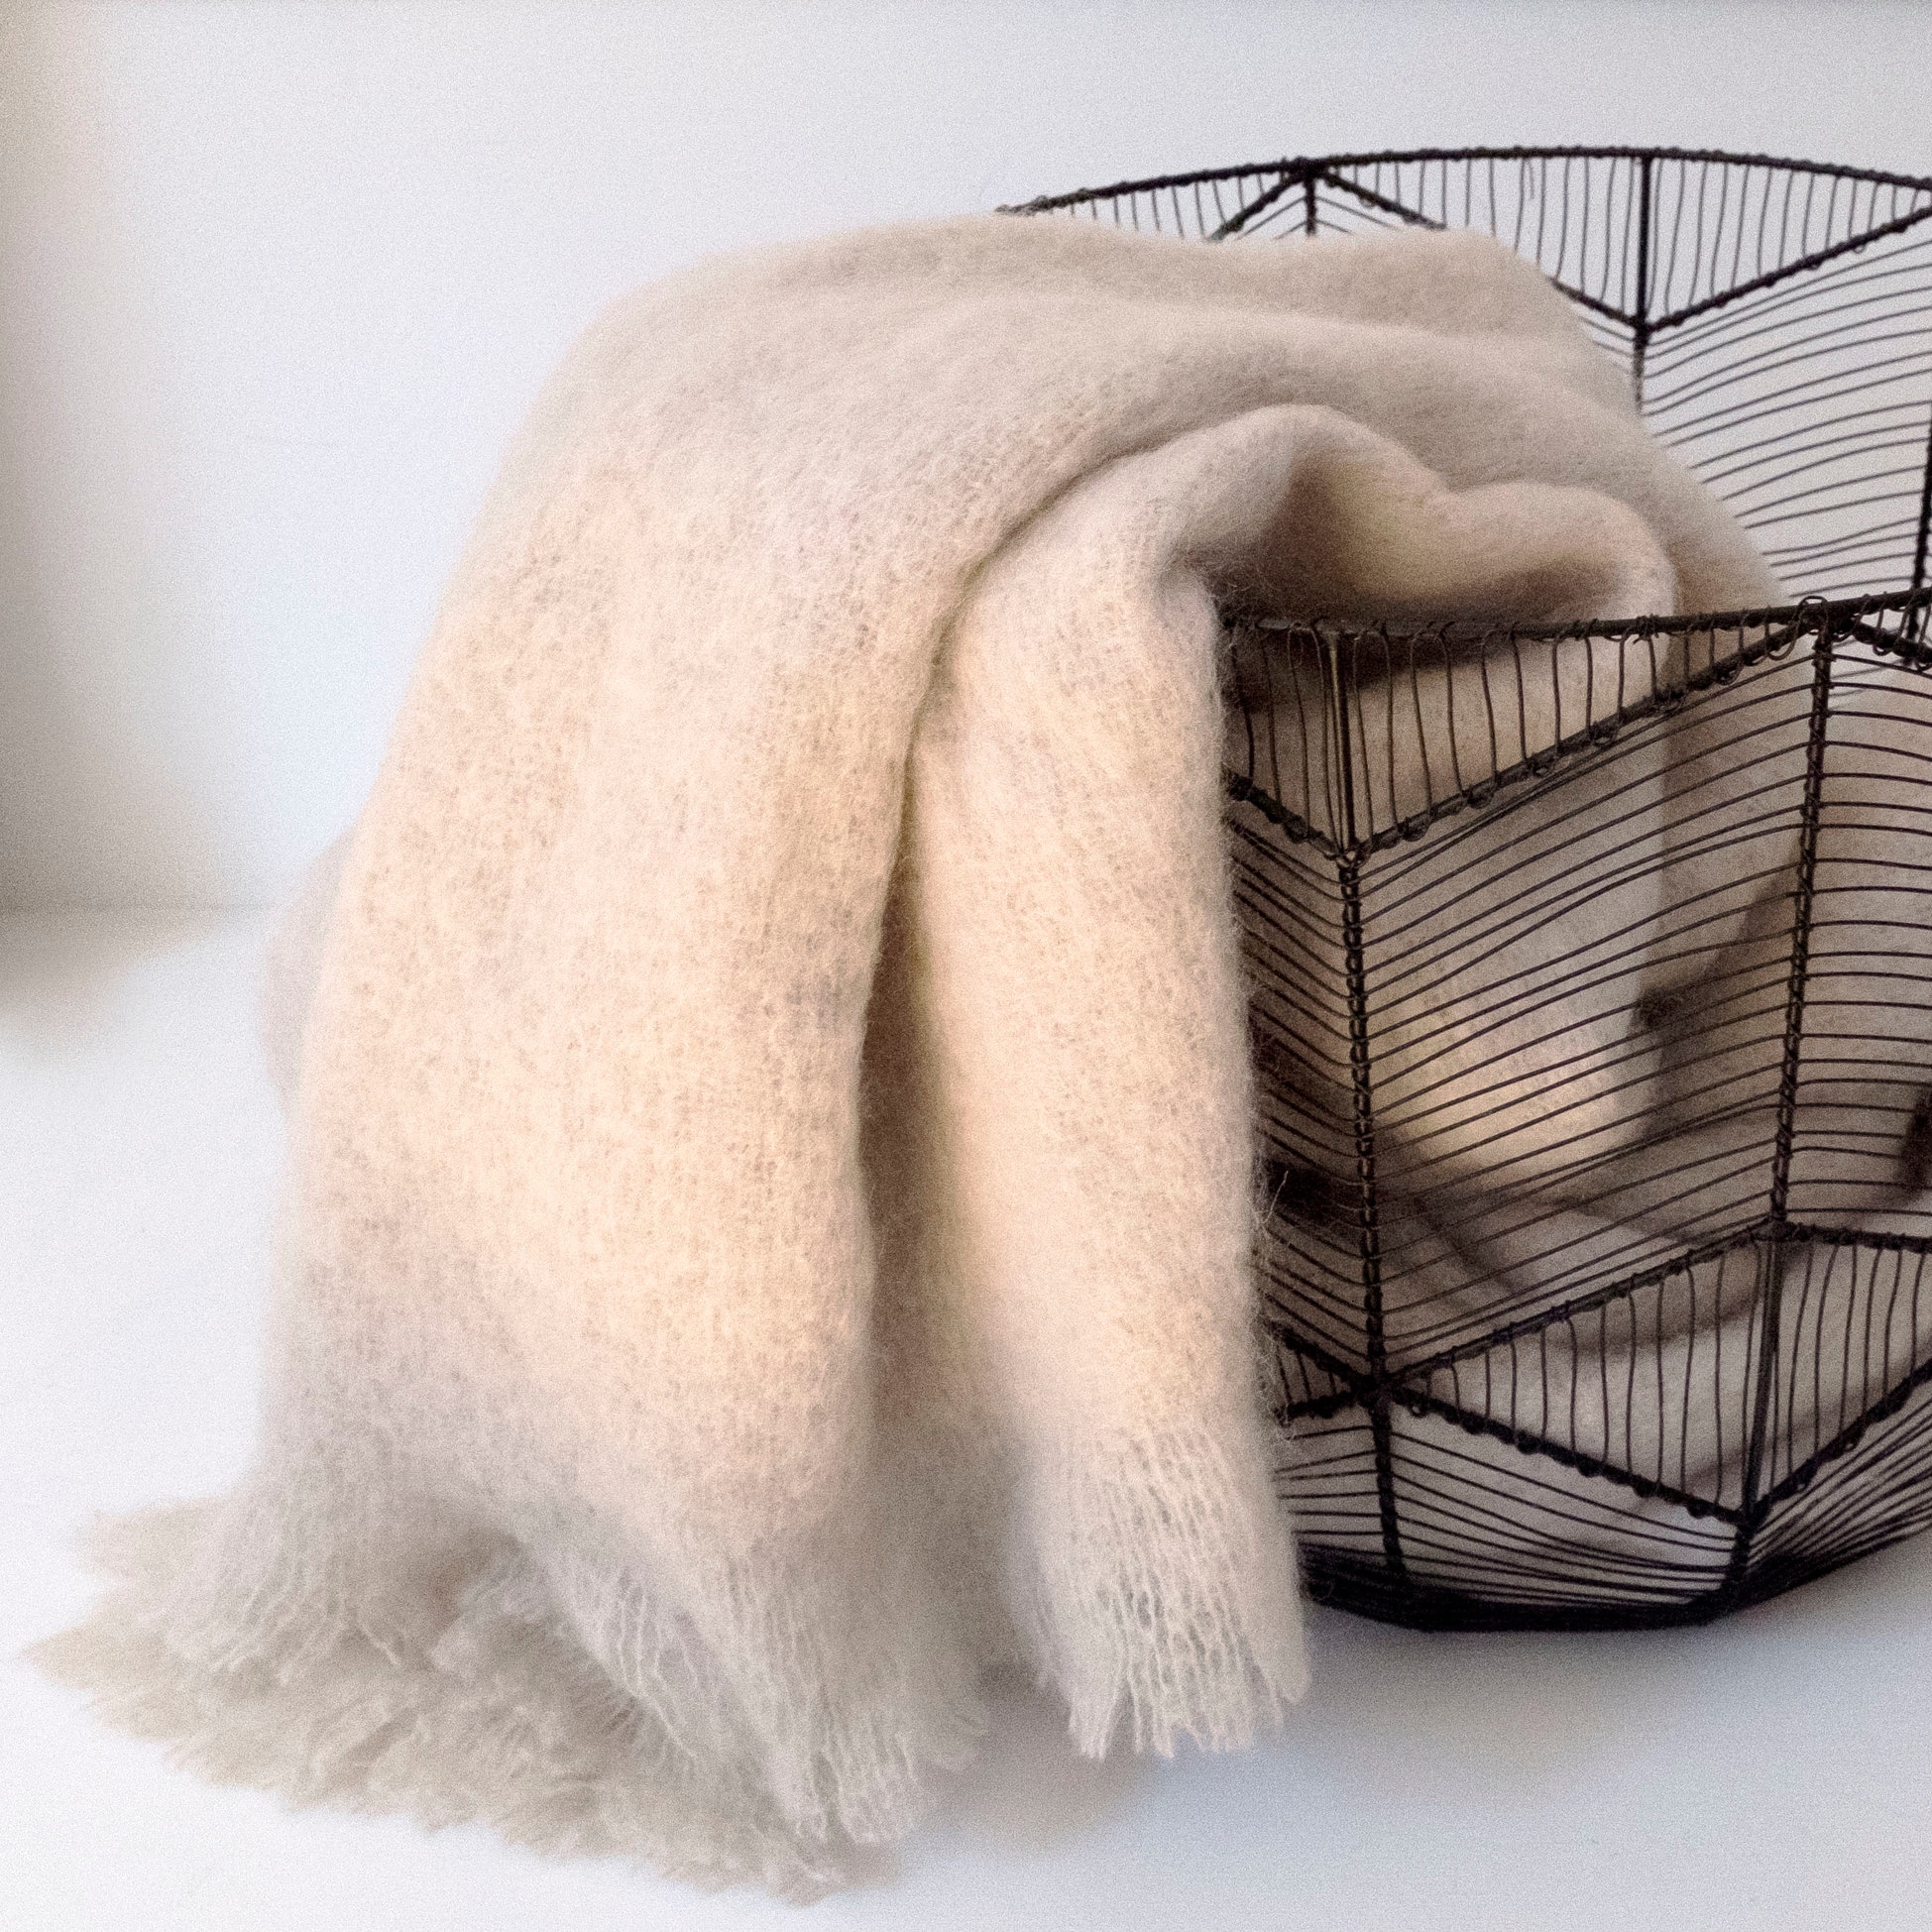 blanket in a basket.jpg